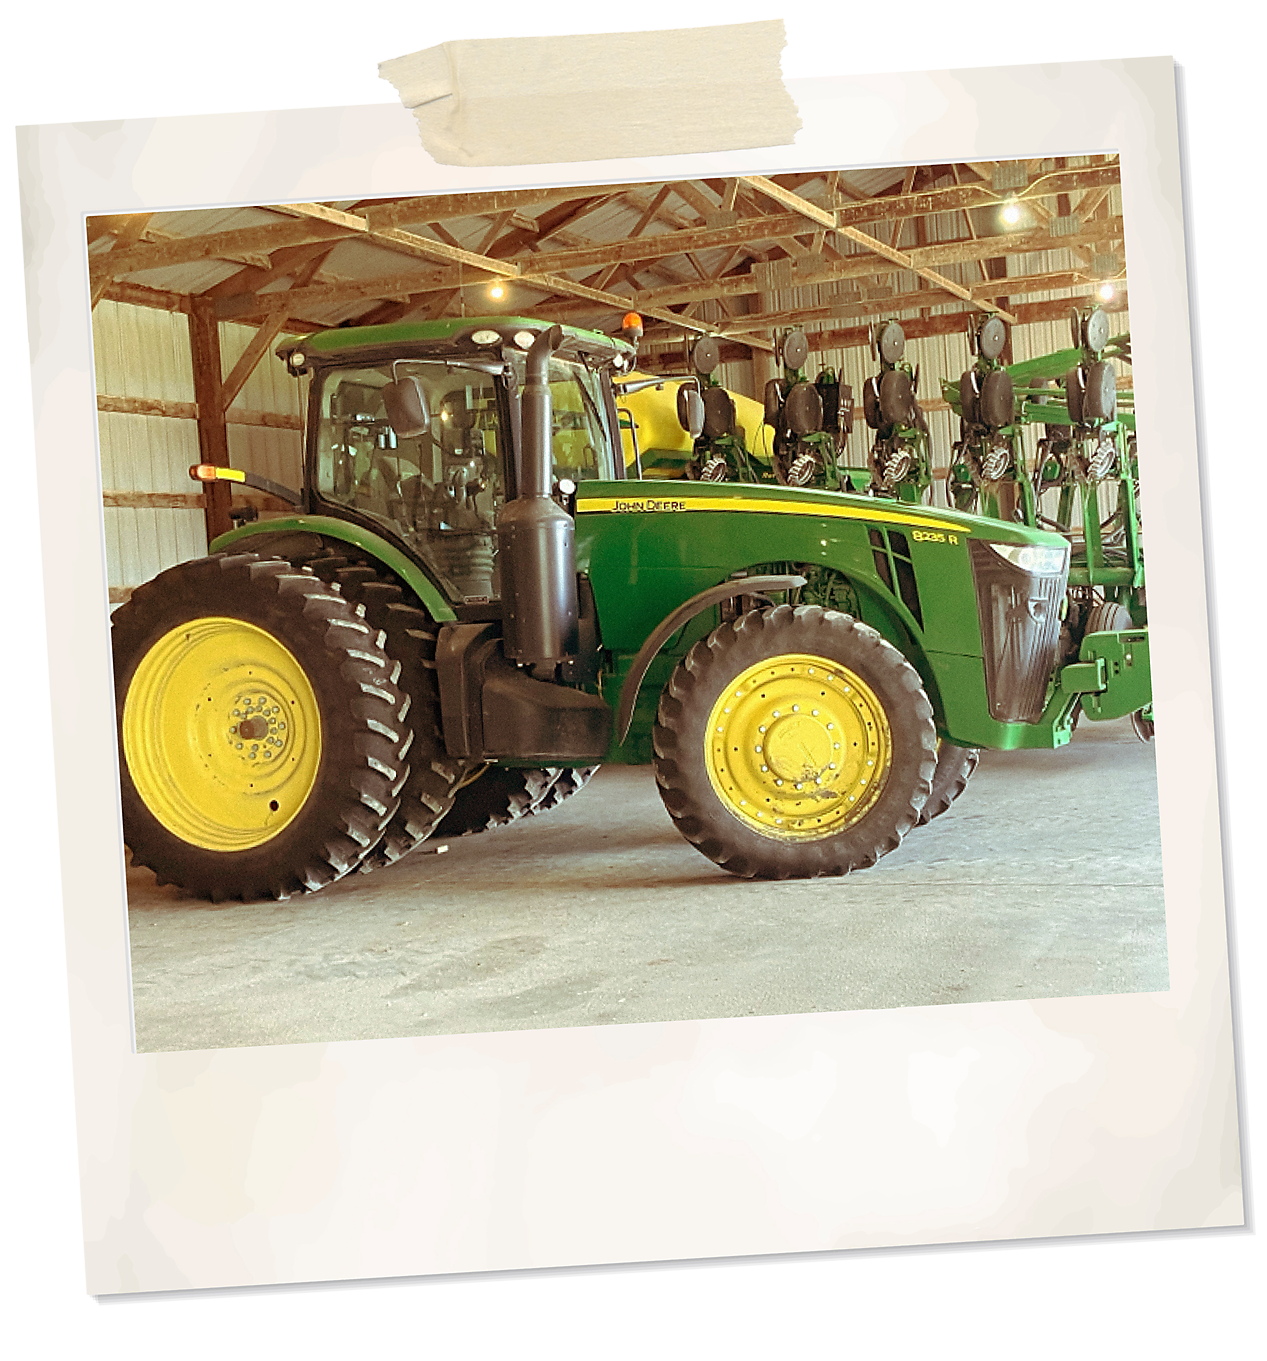 Pic from Bill Furlong, Iowa Farmer (Tractor)